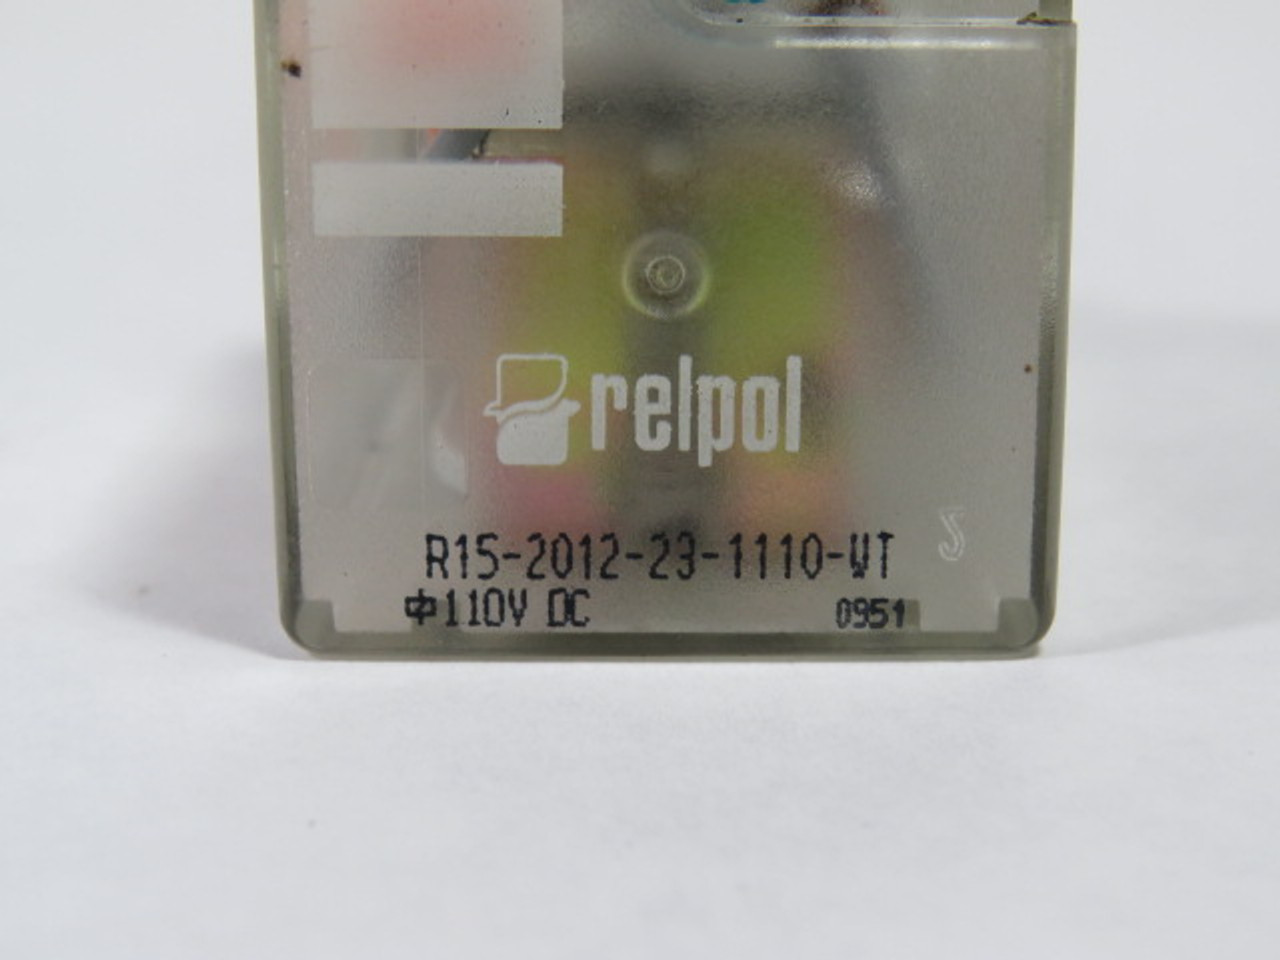 Relpol R15-2012-23-1110-WT Plug-In Relay 110Vdc 10A 8 Pin DPDT USED